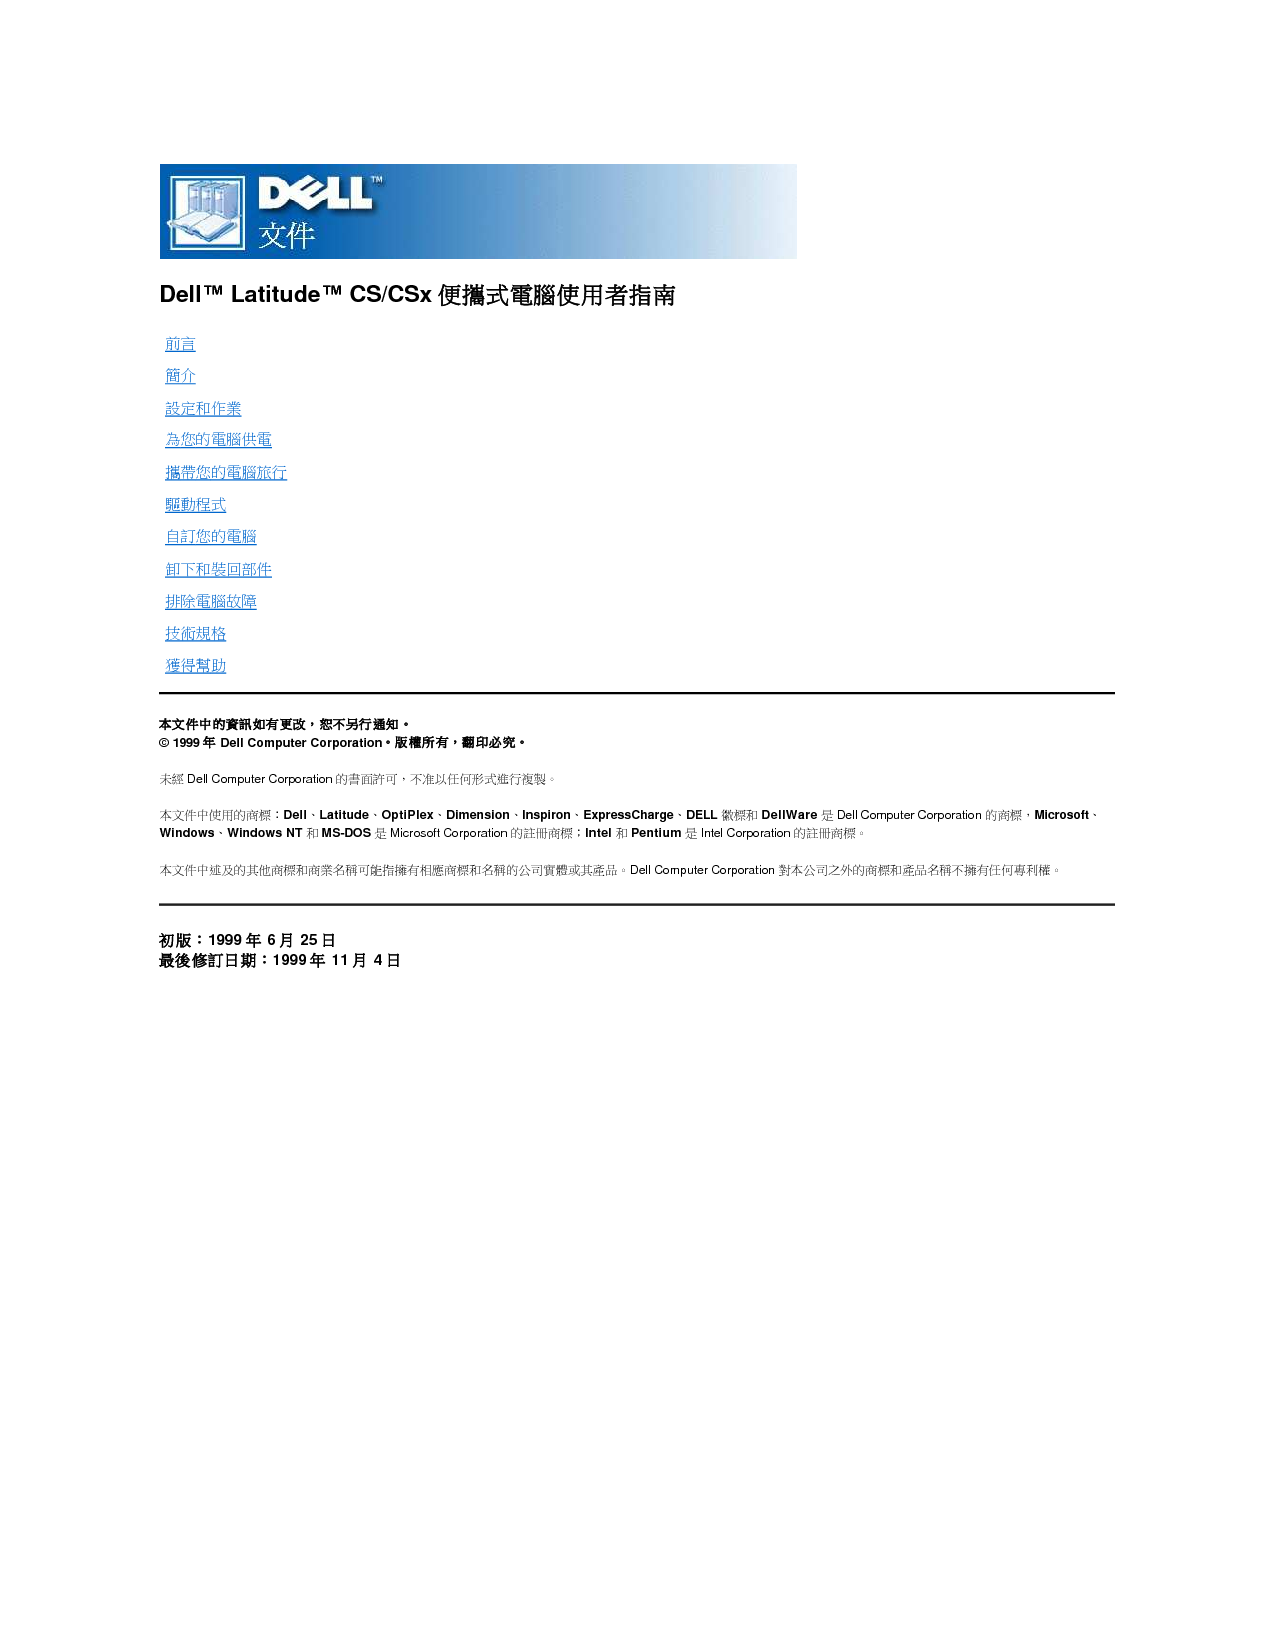 戴尔 Dell Latitude CS R 用户指南 封面